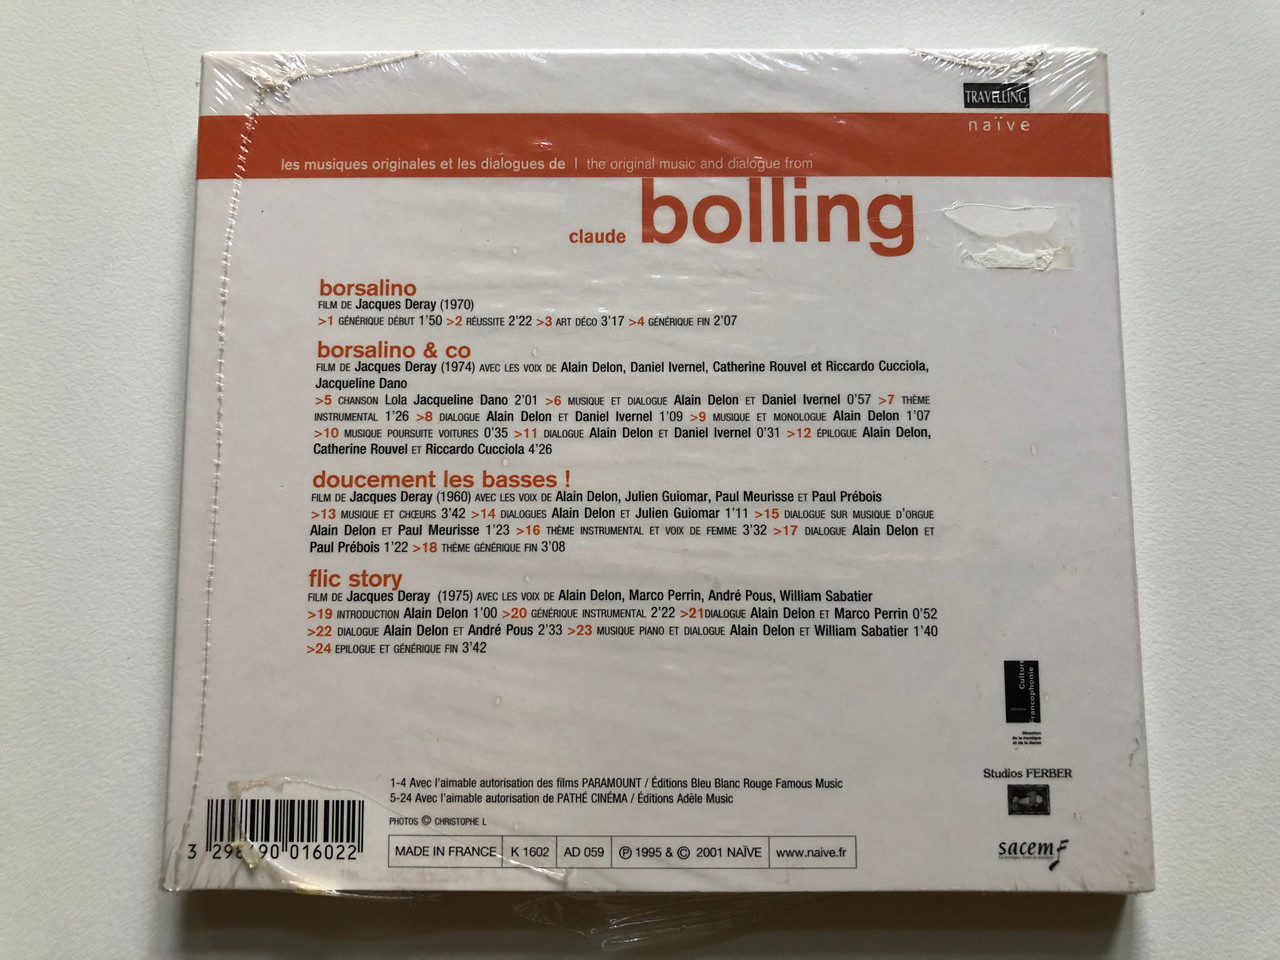 Claude Bolling – Borsalino; Borsalino & Co; Doucement Les Basses; Flic  Story / Travelling / Naïve Audio CD 2001 / K 1602 - Bible in My Language